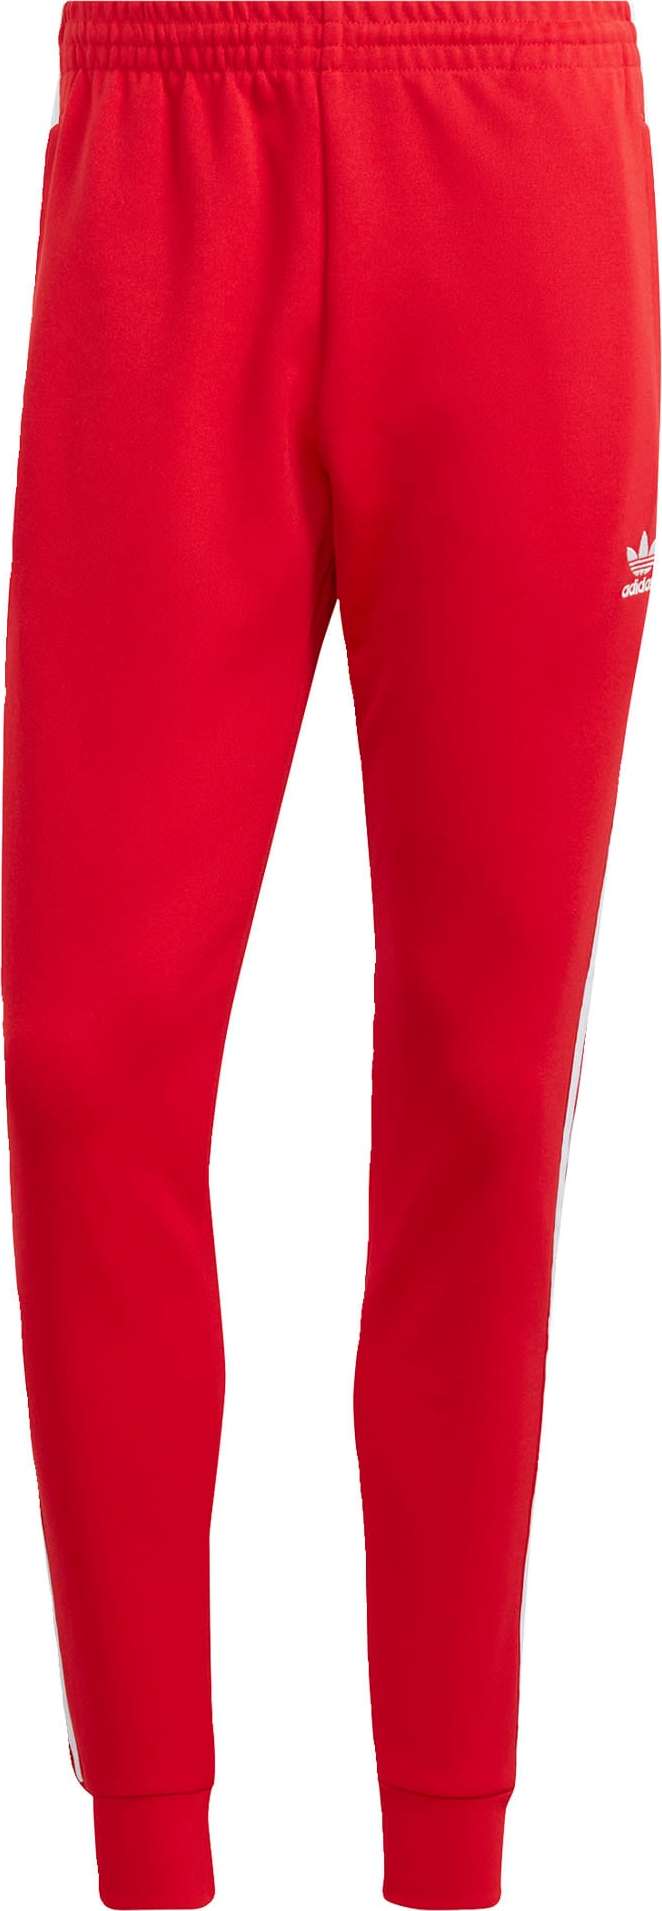 Kalhoty 'Adicolor Classics Sst' adidas Originals červená / bílá